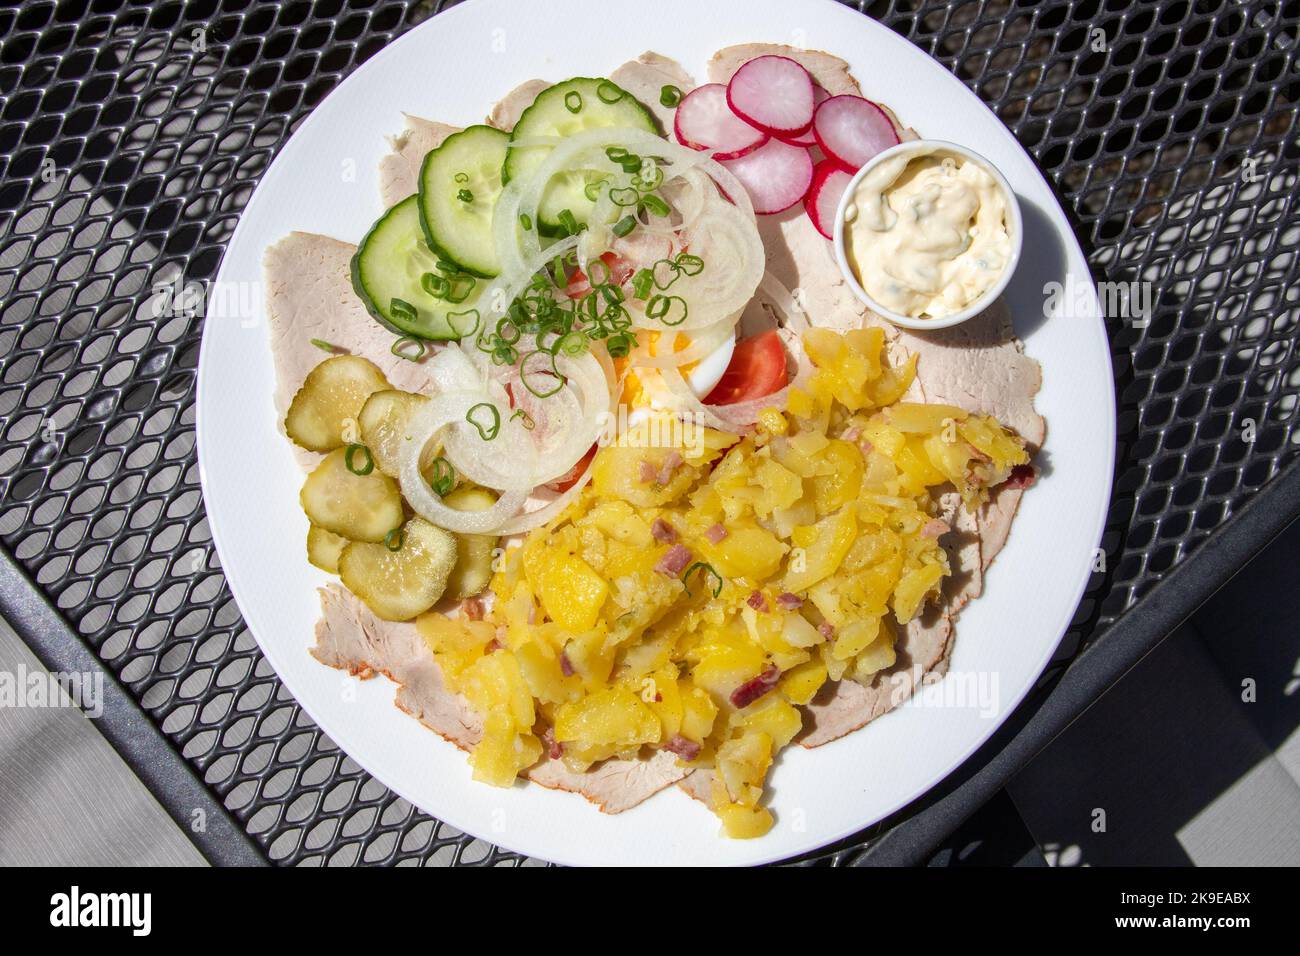 Bratenbrot vom Eifeler Landschwein, salade de pommes de terre sur rôti de porc au restaurant Zum Grunen Baum, Bacharach, Allemagne Banque D'Images